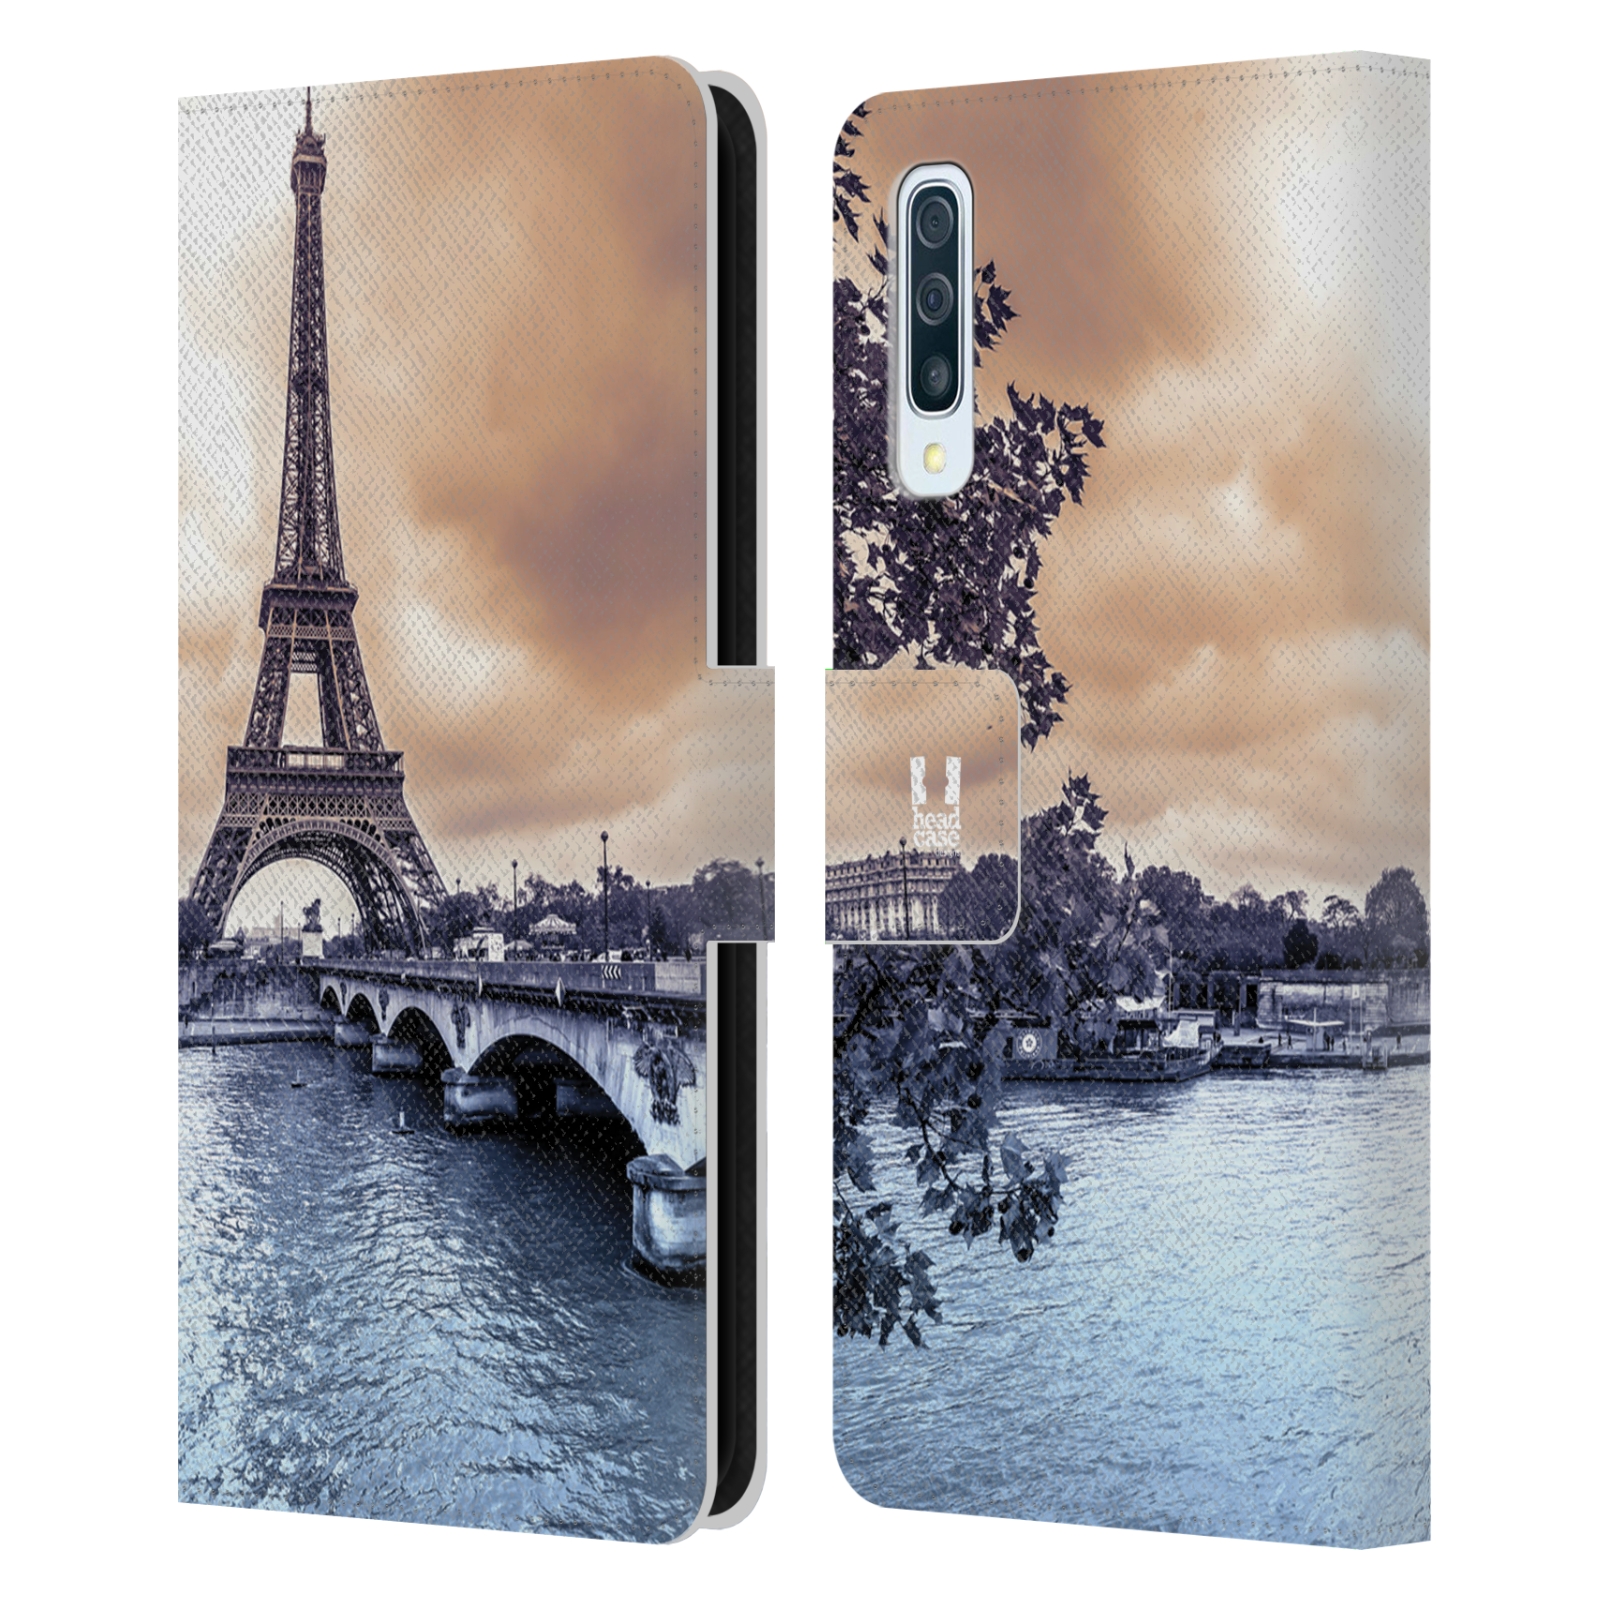 Pouzdro pro mobil Samsung Galaxy A50 / A30s - Eiffelova věž Paříž - Francie